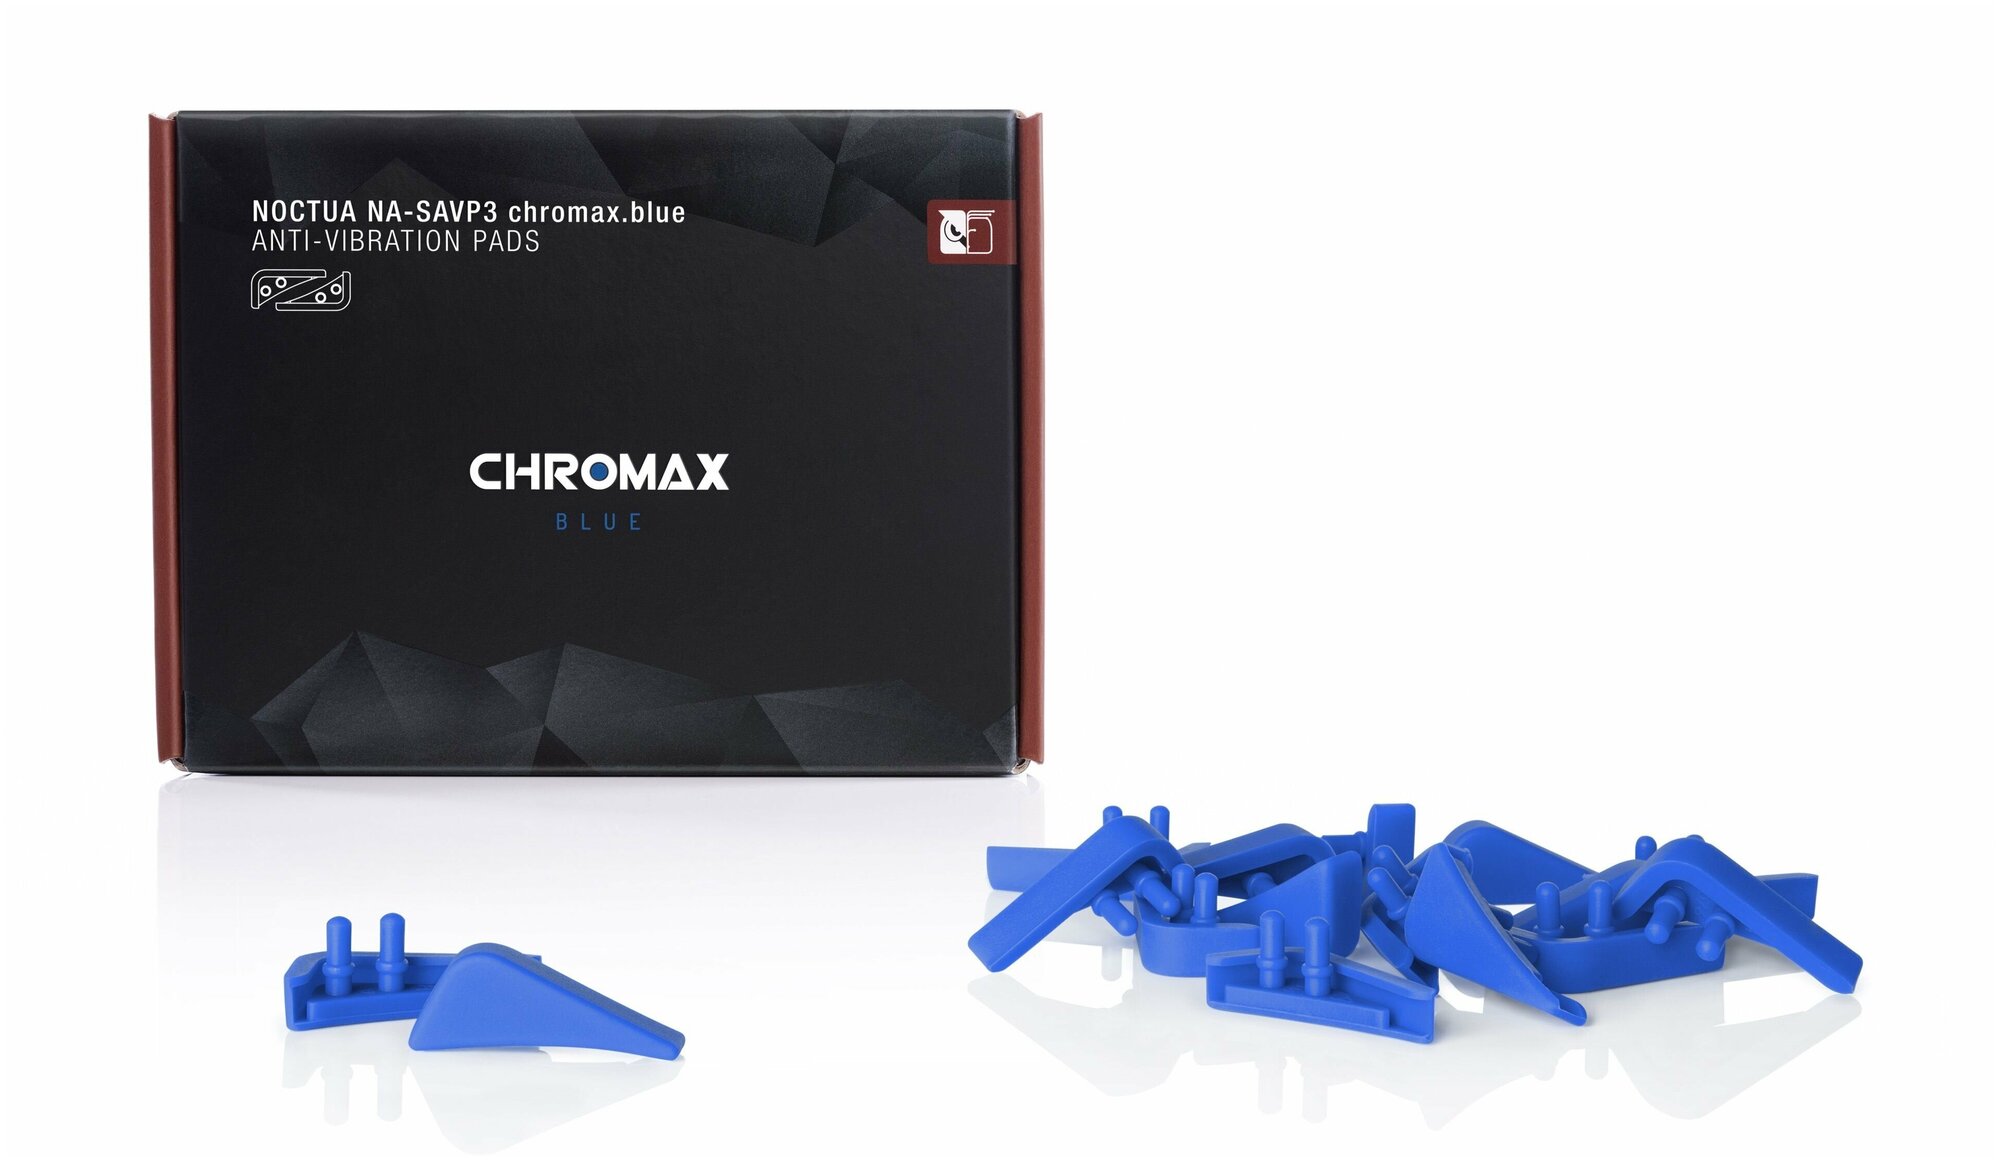 Прокладка для уменьшения вибрации Noctua NA-SAVP3 Chromax 16шт, синие